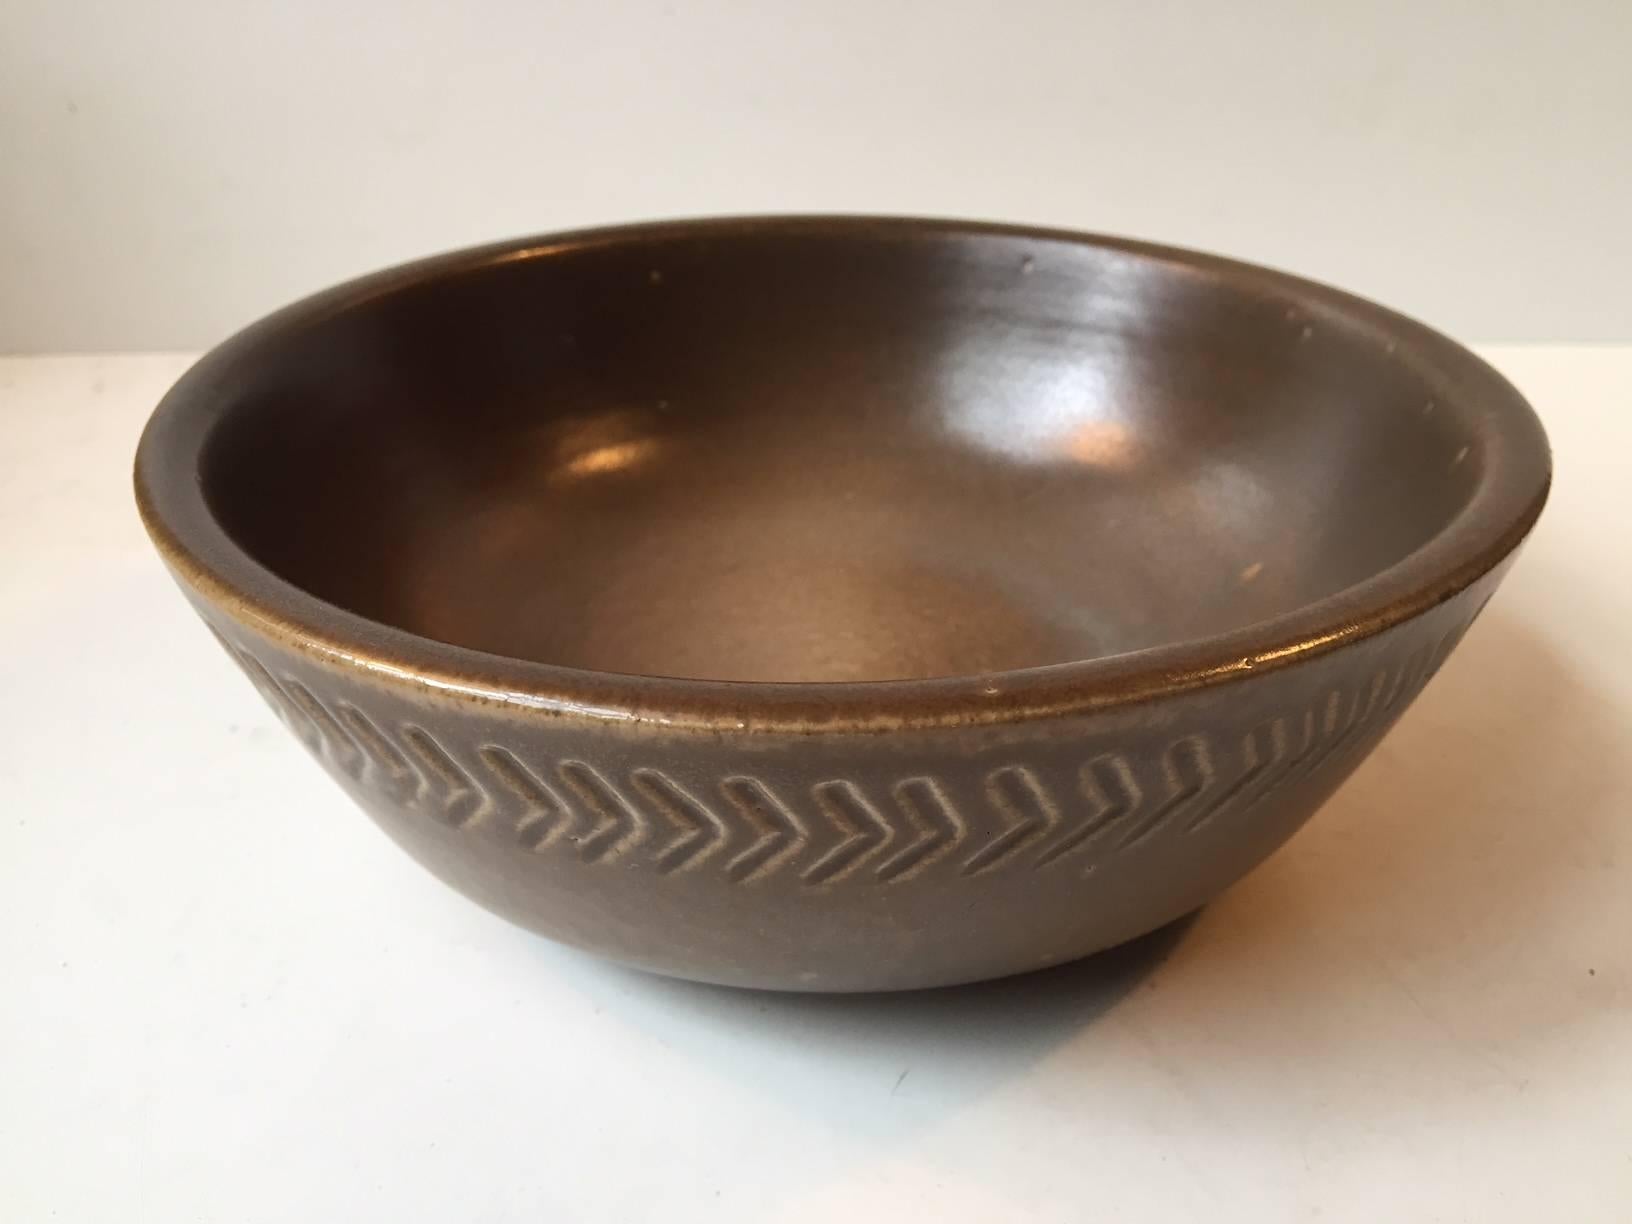 Glazed Unique Swedish Modern Pottery Bowl with Geometric Decor by Yngve Blixt, Hoganas